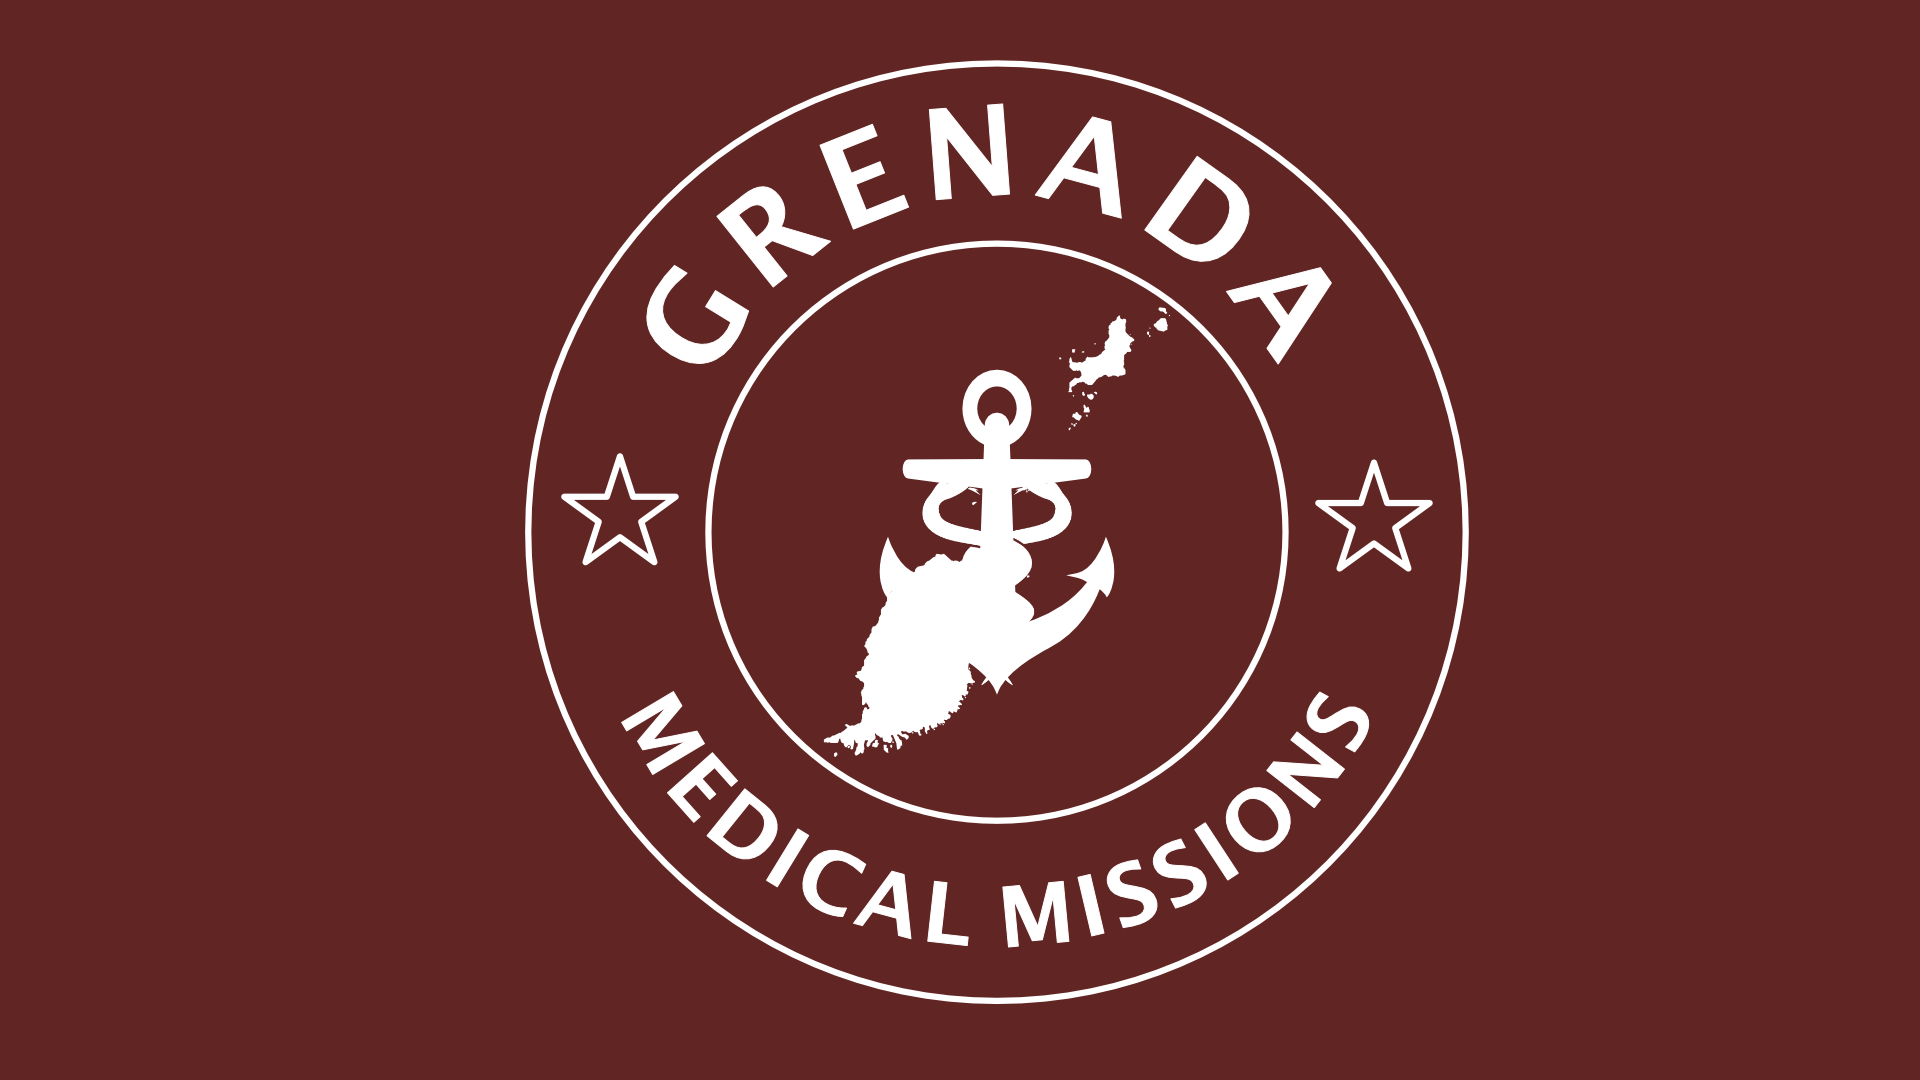 Grenada Medical Missions Logo.png